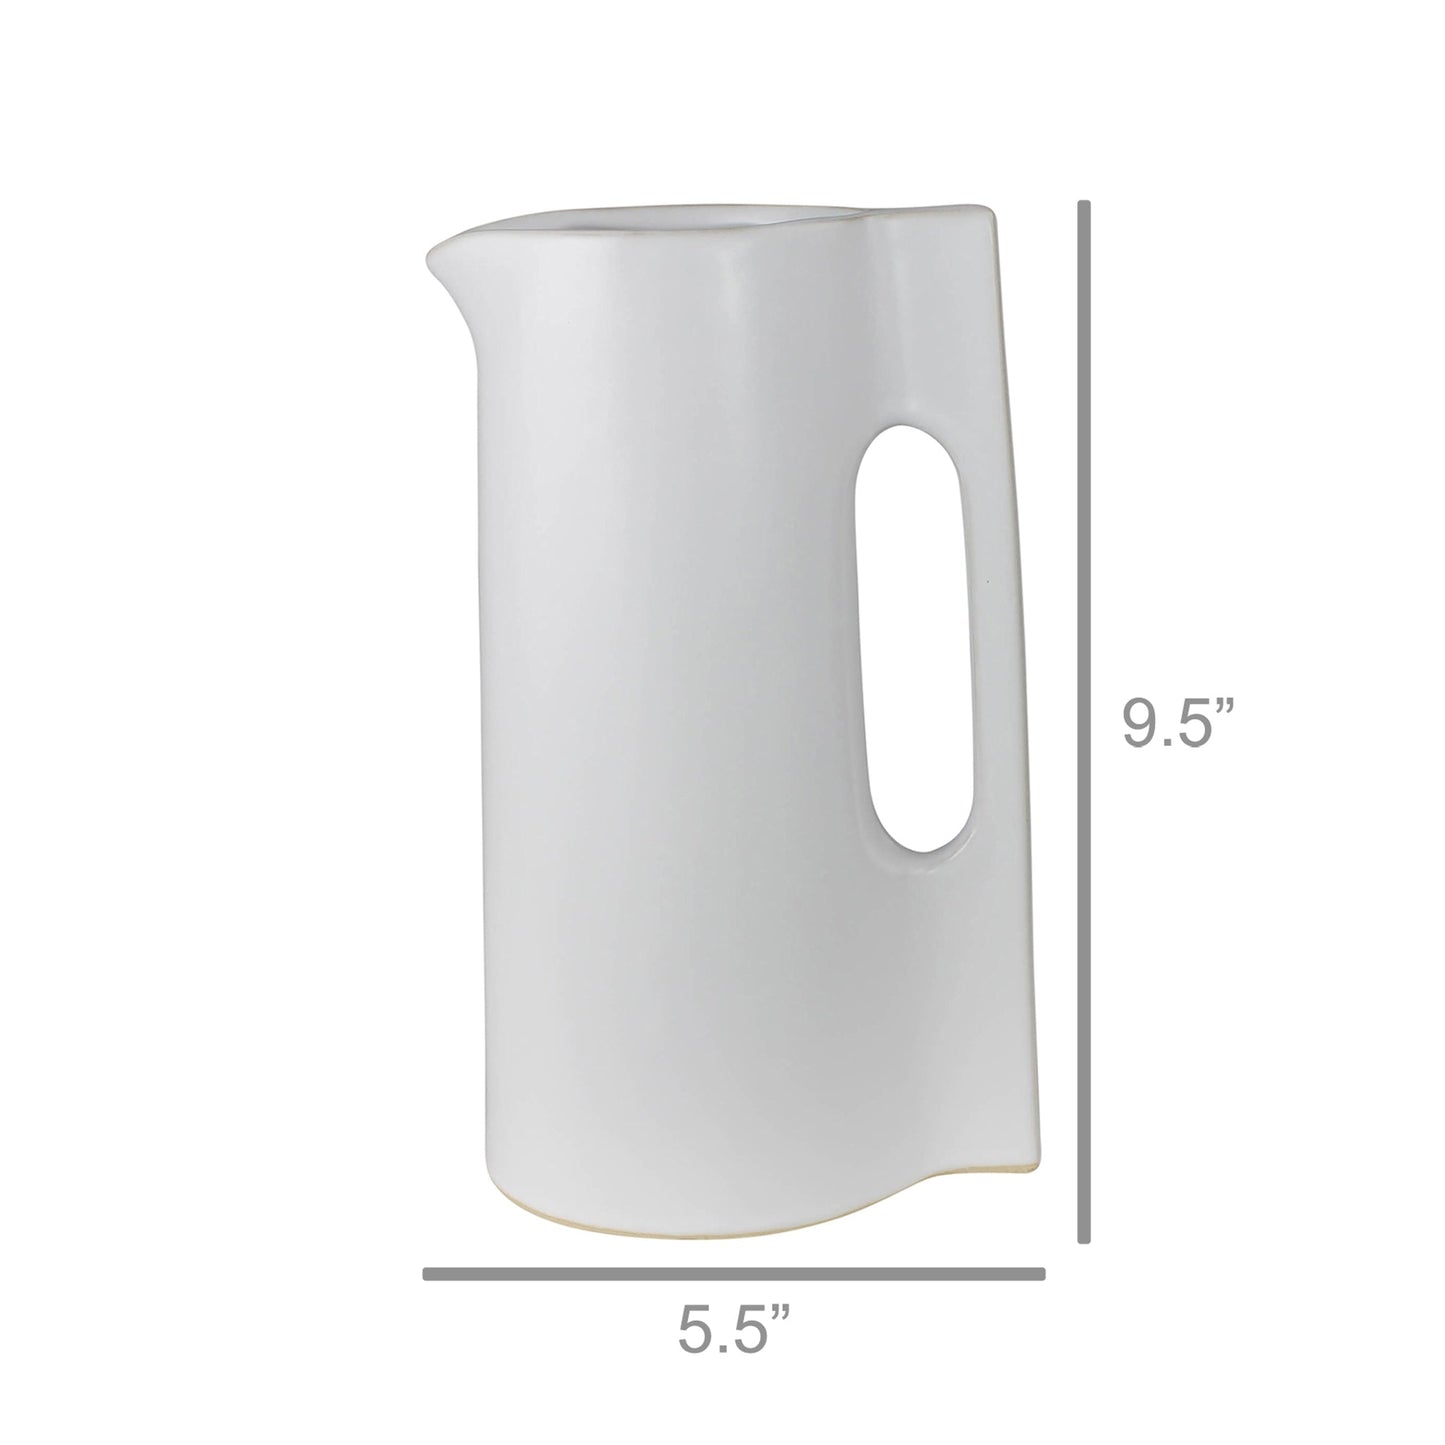 ‘Issa’ Ceramic Pitcher, Set of 2 - EcoLuxe Furnishings